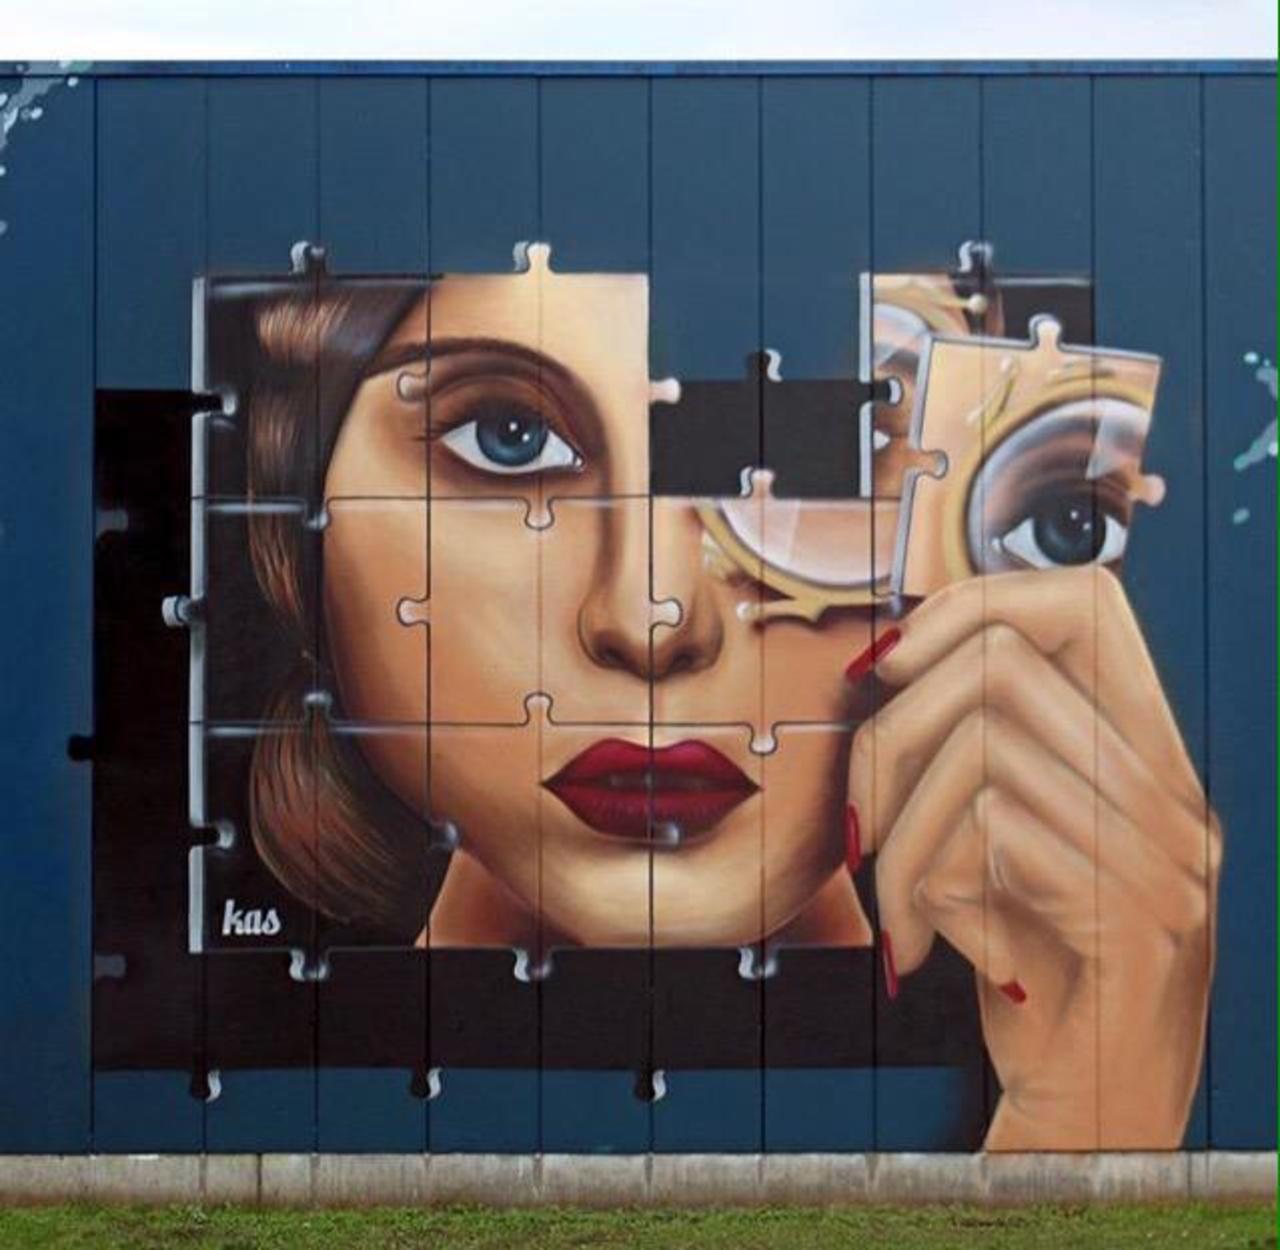 RT @GoogleStreetArt: Kas Art's new Street Art "Piece of me" in Aalst Belgium 

#art #graffiti #mural #streetart http://t.co/XYk5oWMWa6